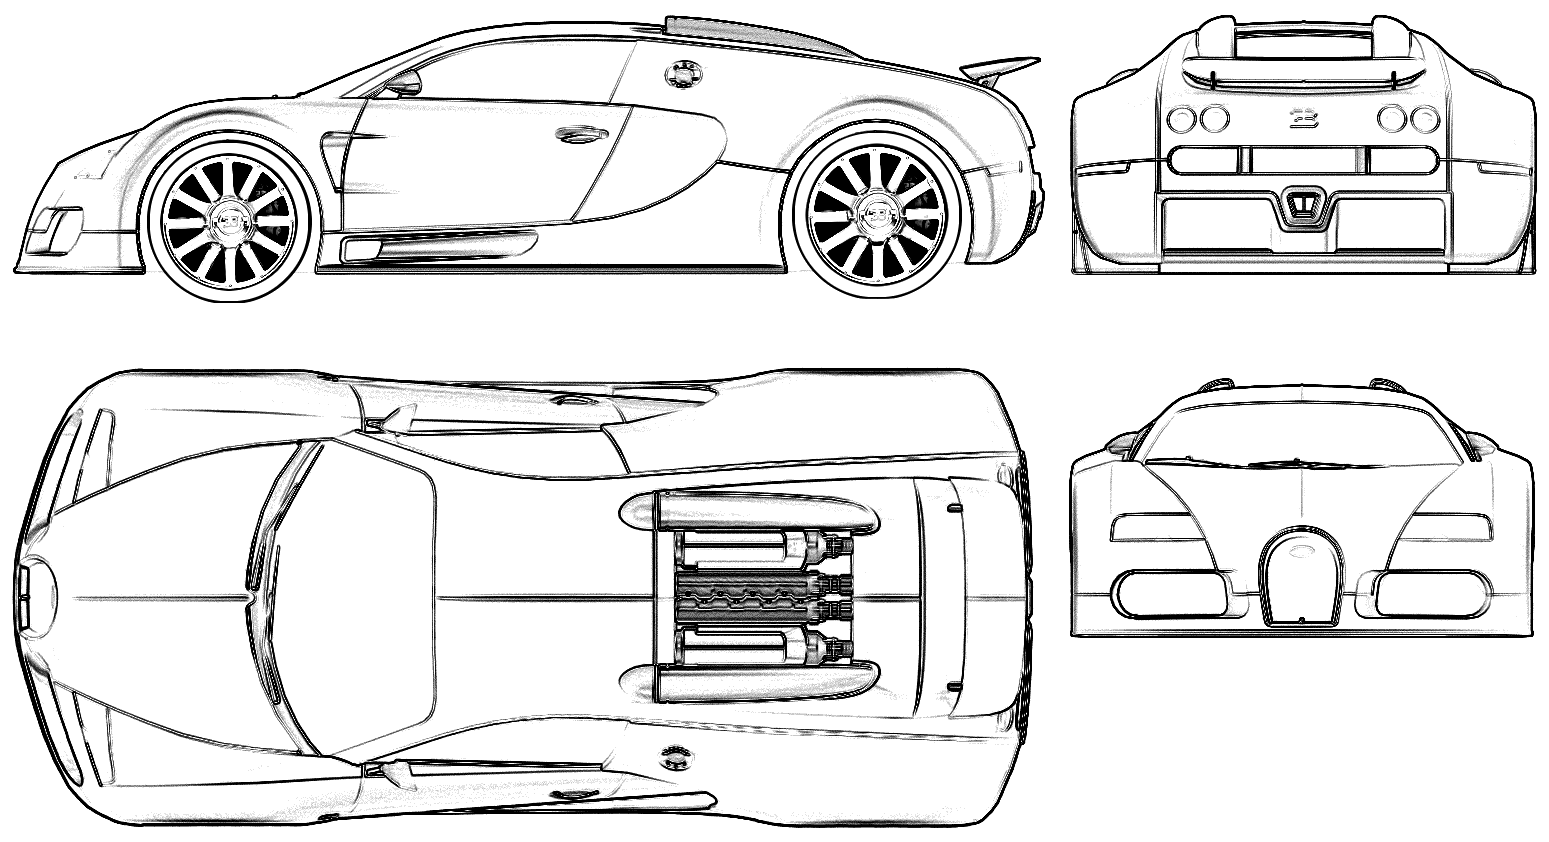 2005 Bugatti Veyron EB 16.4 Coupe v2 blueprints free - Outlines